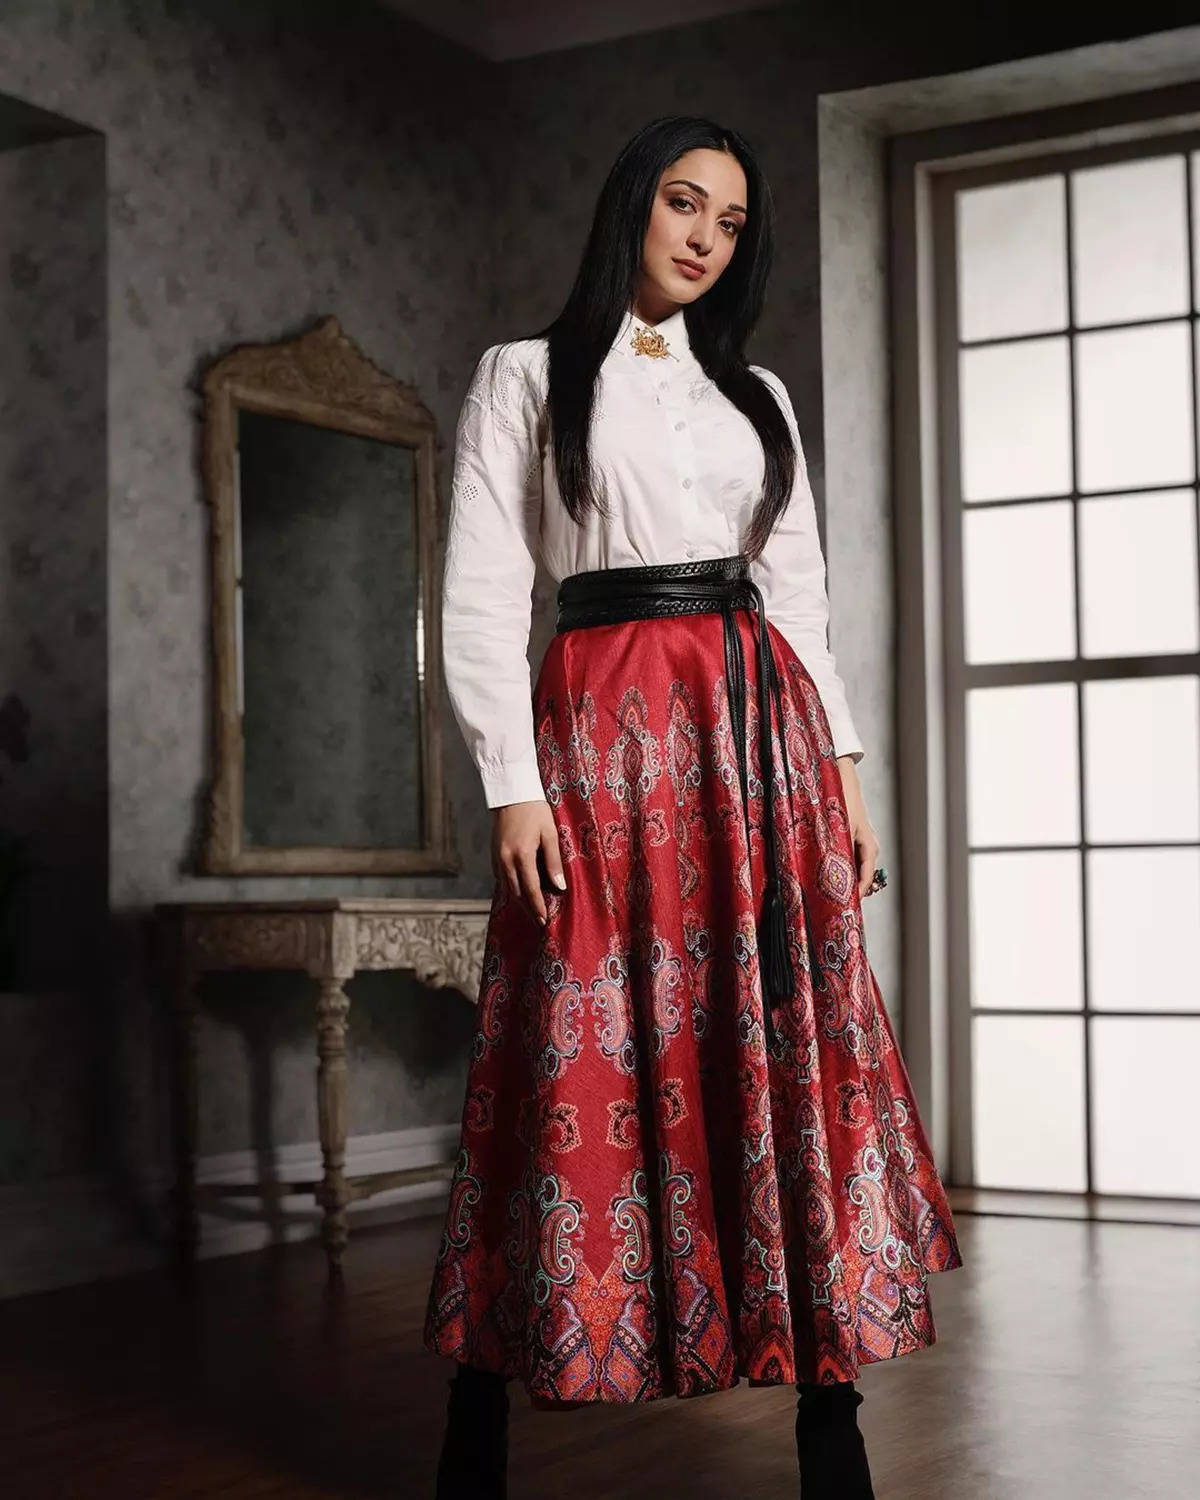 ​Kiara Advani transforms simple daily wear into showstopping elegance​